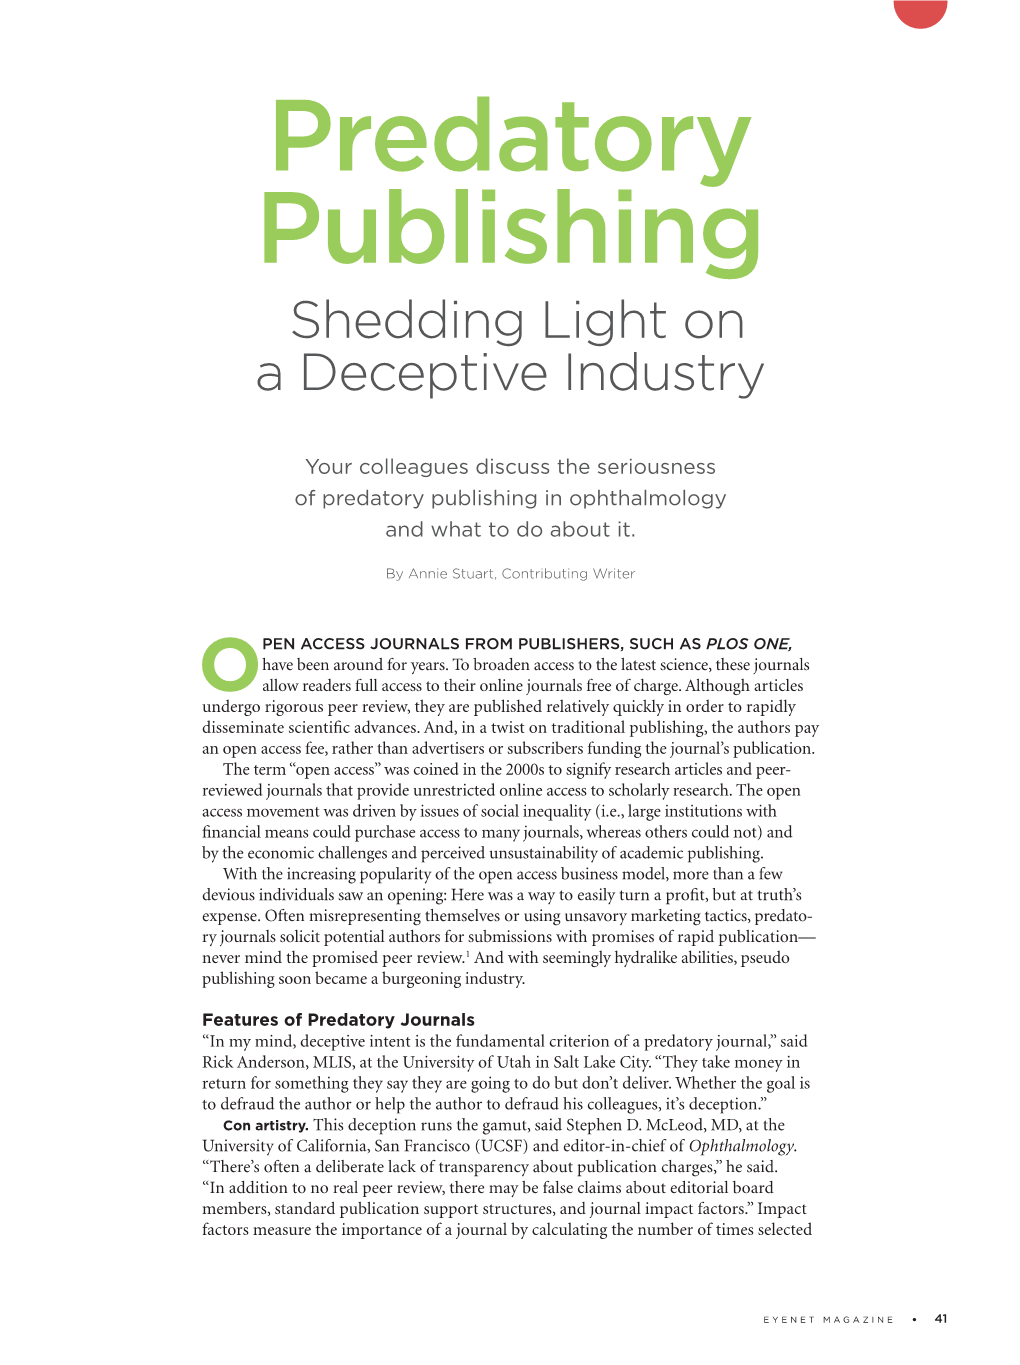 Predatory Publishing Shedding Light on a Deceptive Industry